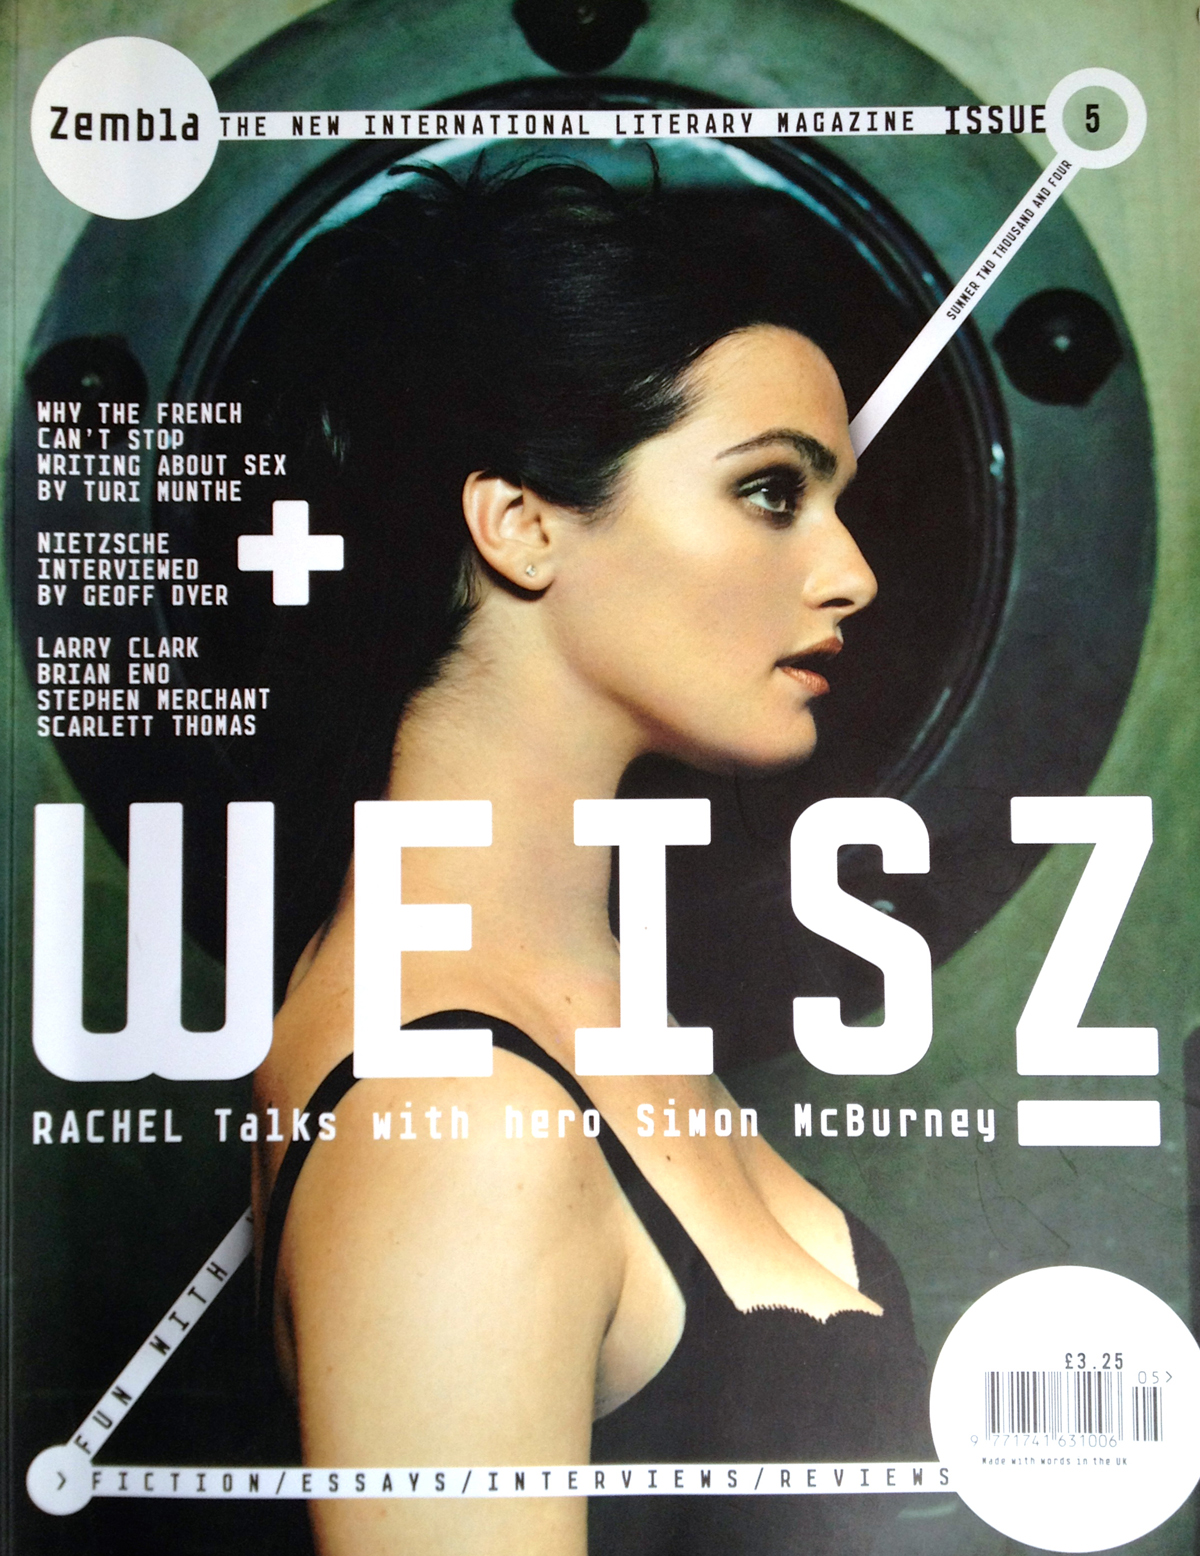 Zembla Weisz cover